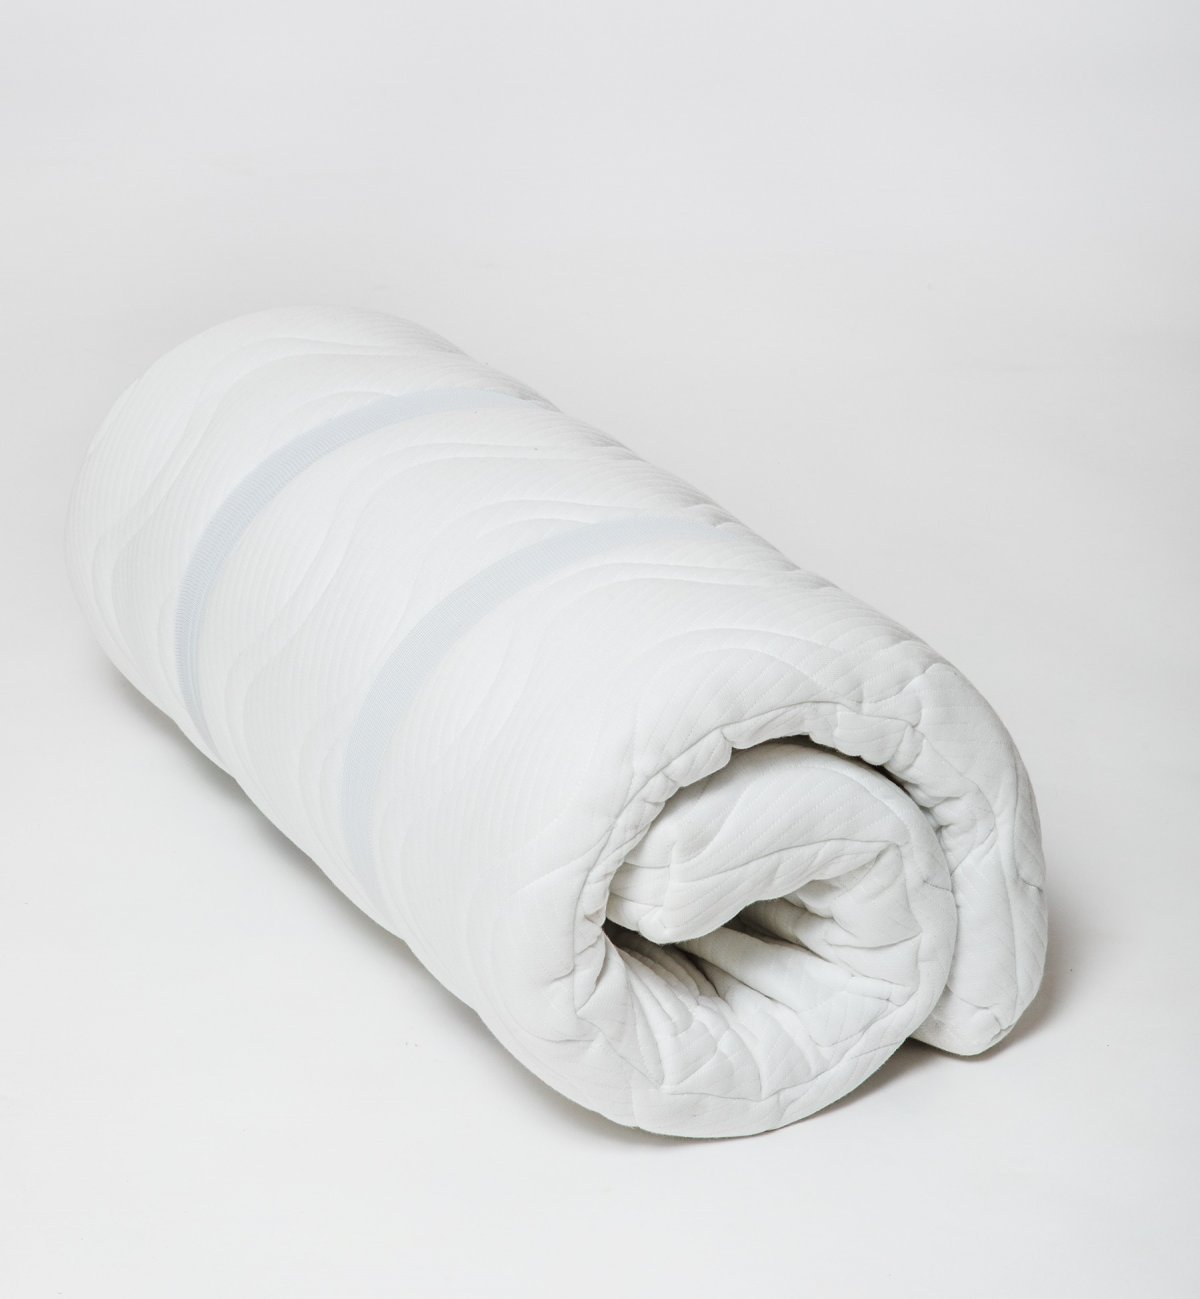 COCOLATEX® baby travel mattress, a natural nomad mattress